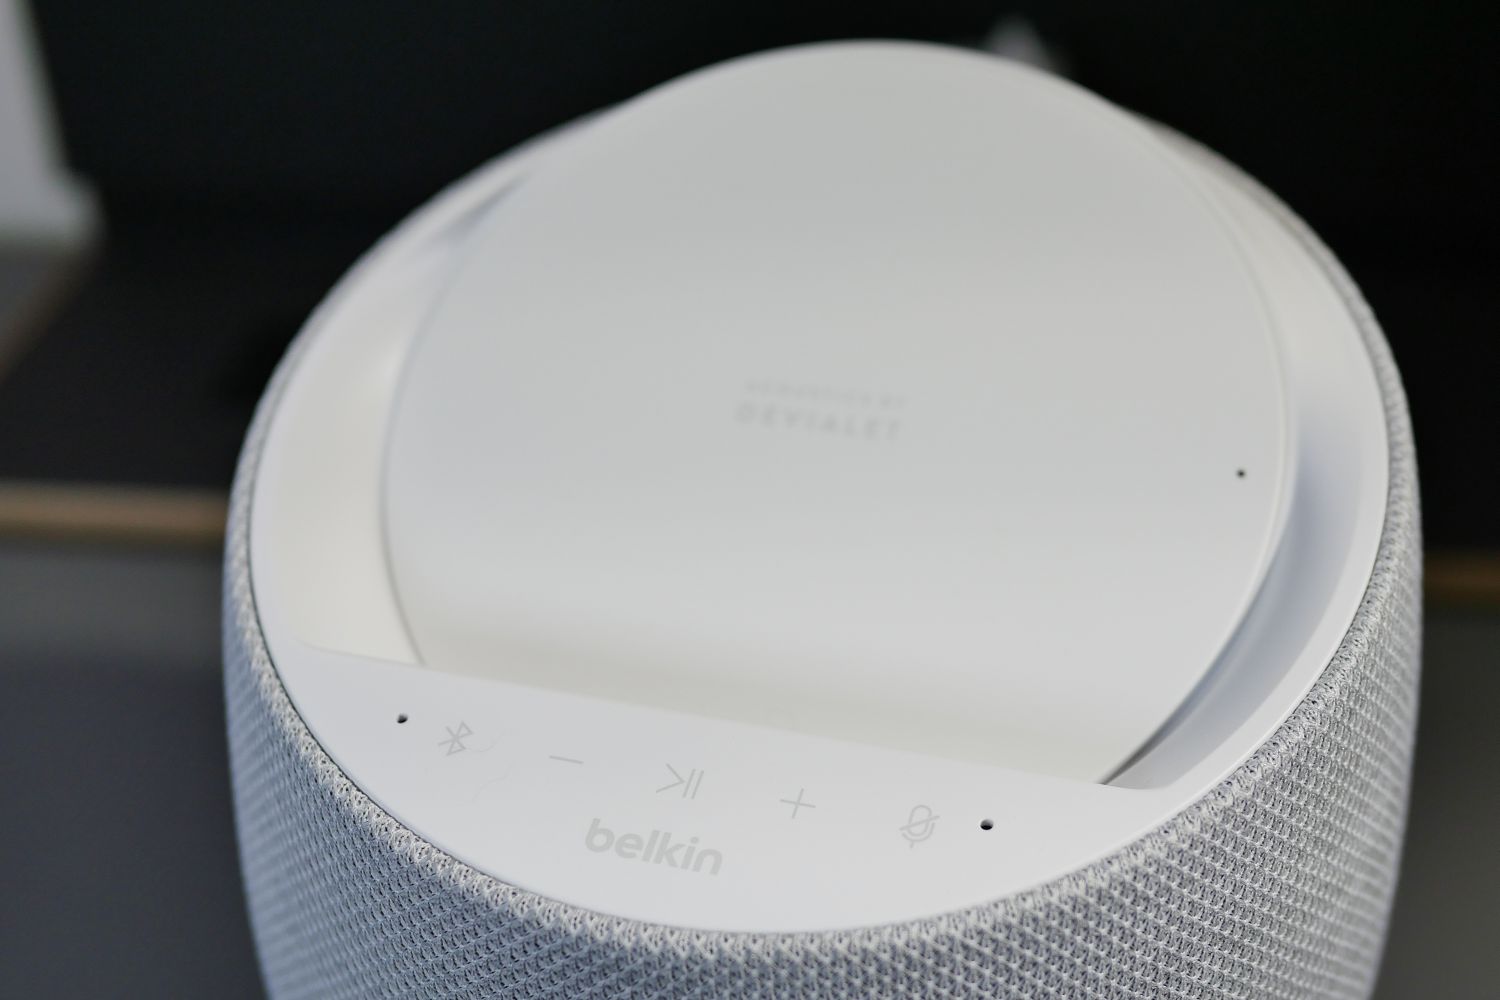 Belkin SoundForm Elite Hi-Fi Review: A Speaker with Utility